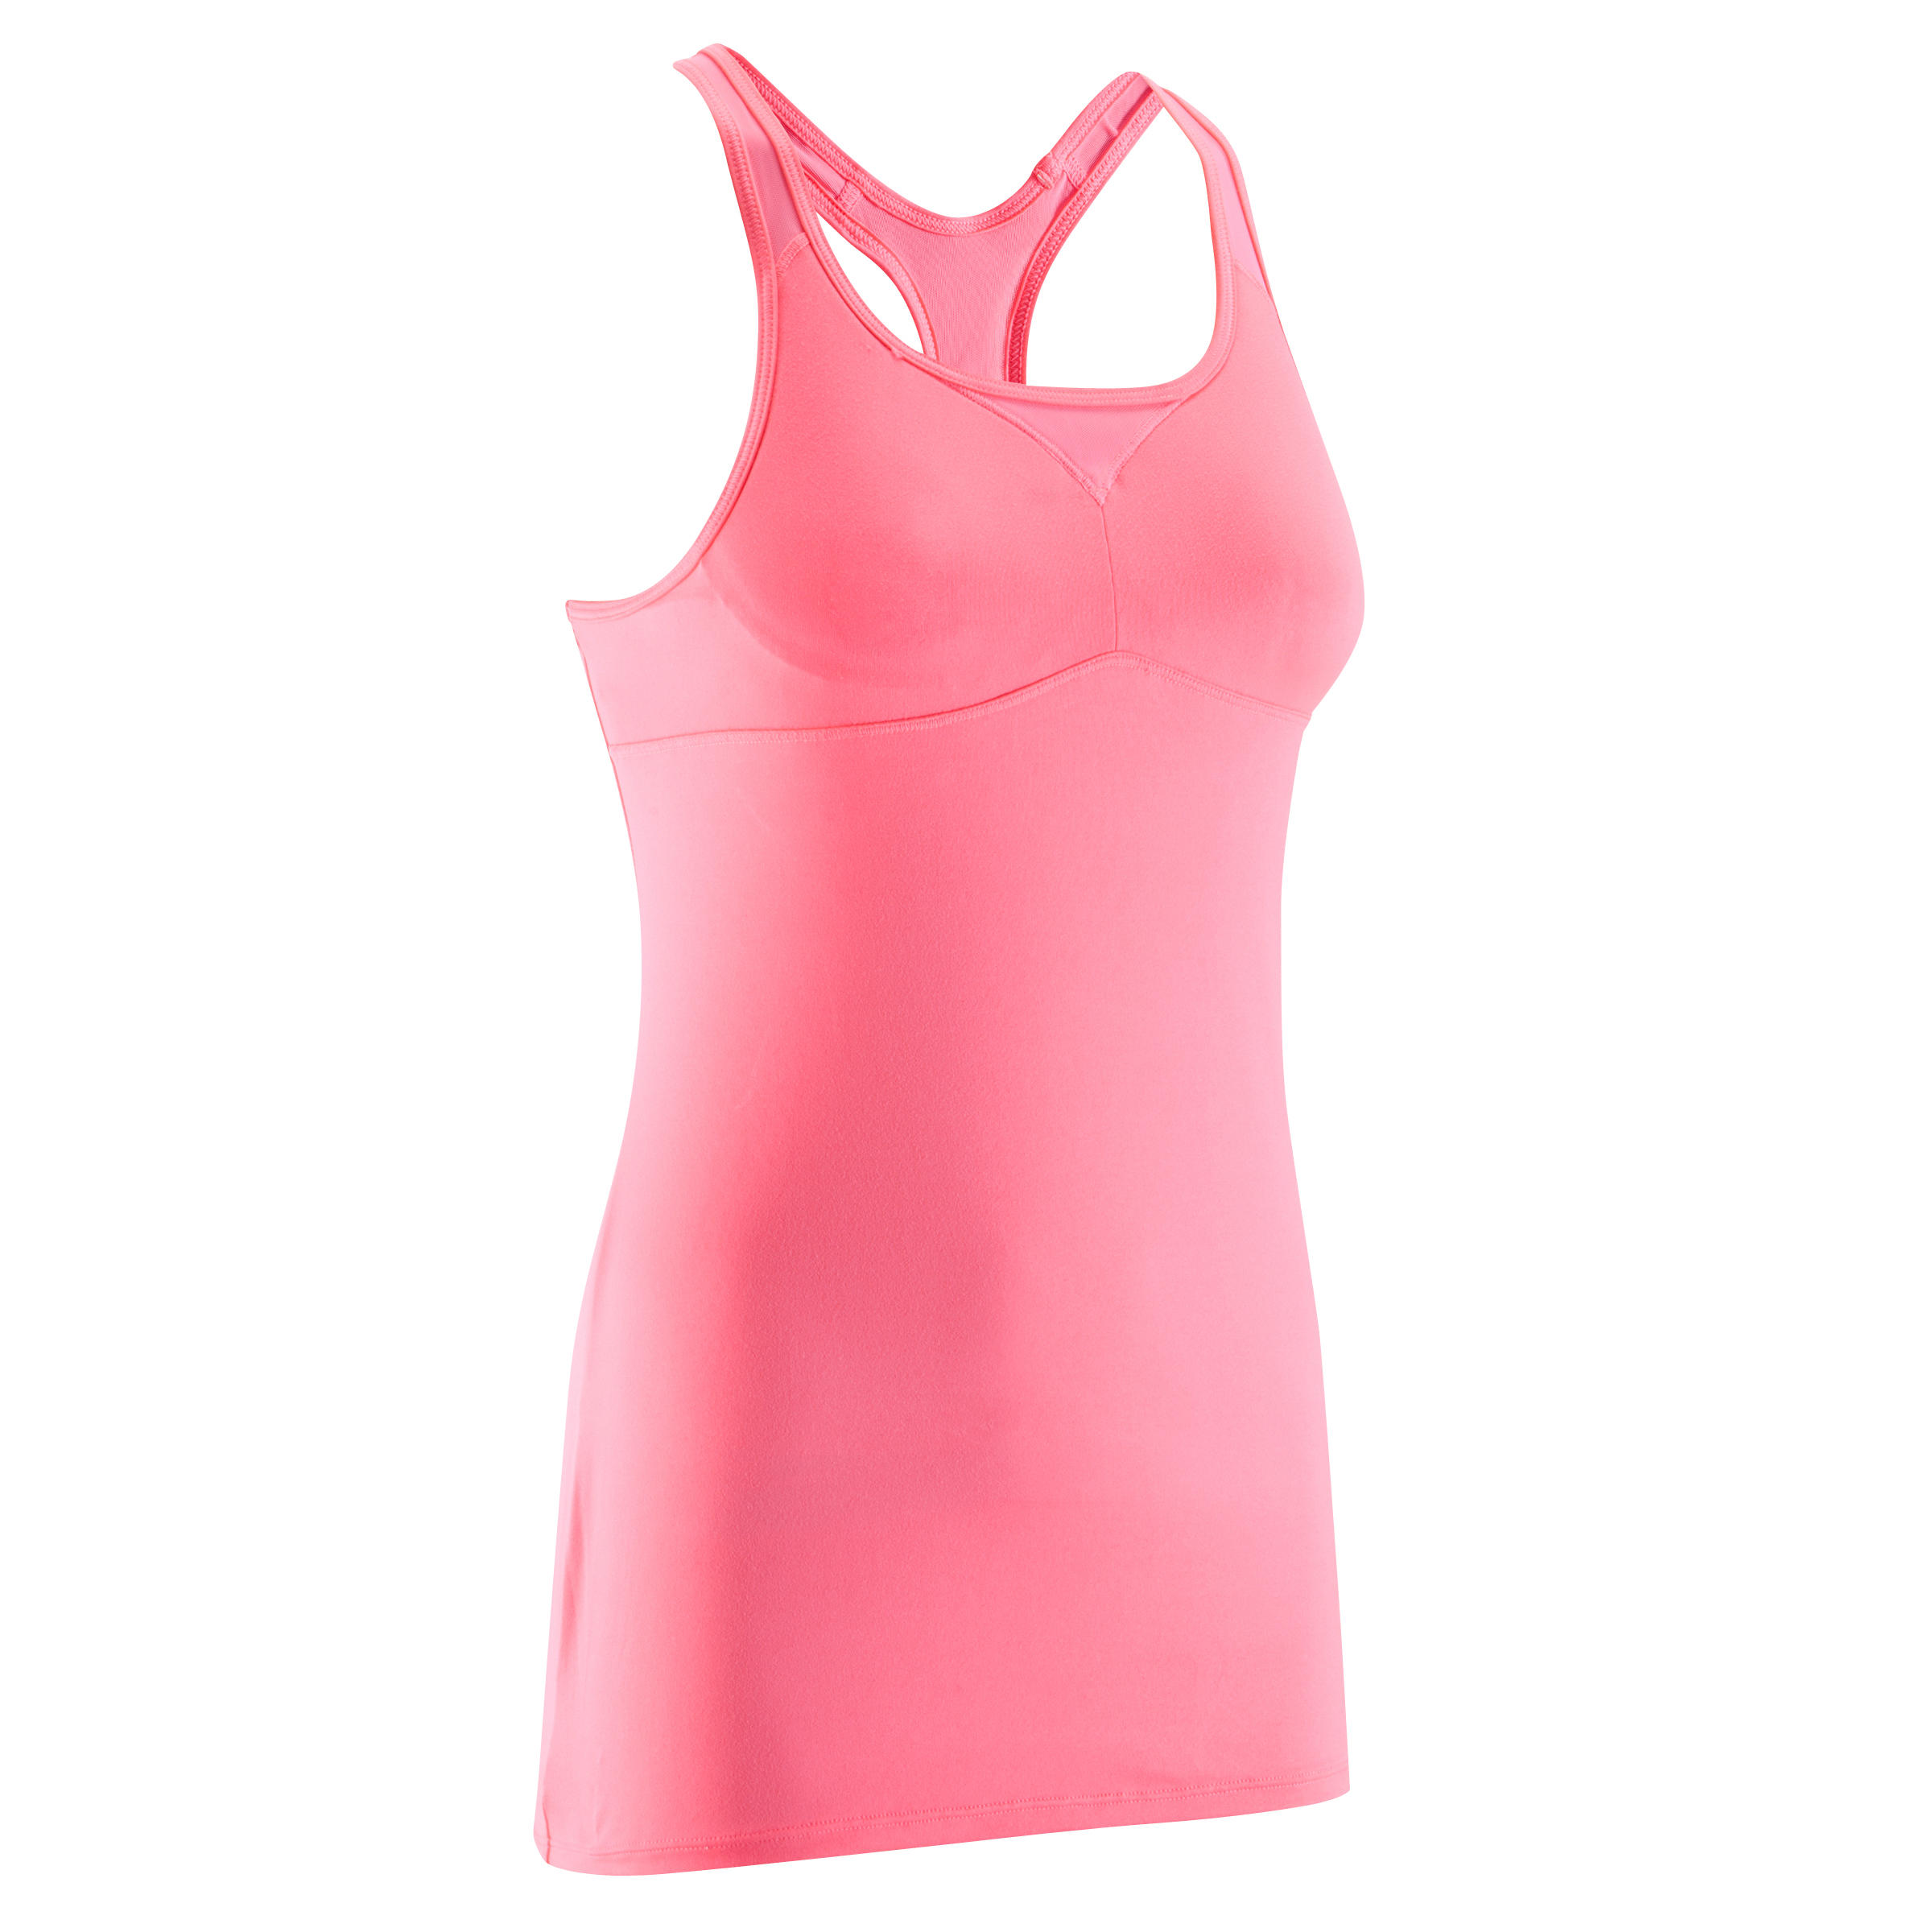 DOMYOS Energy Xtreme Women's Fitness Tank Top - Neon Pink